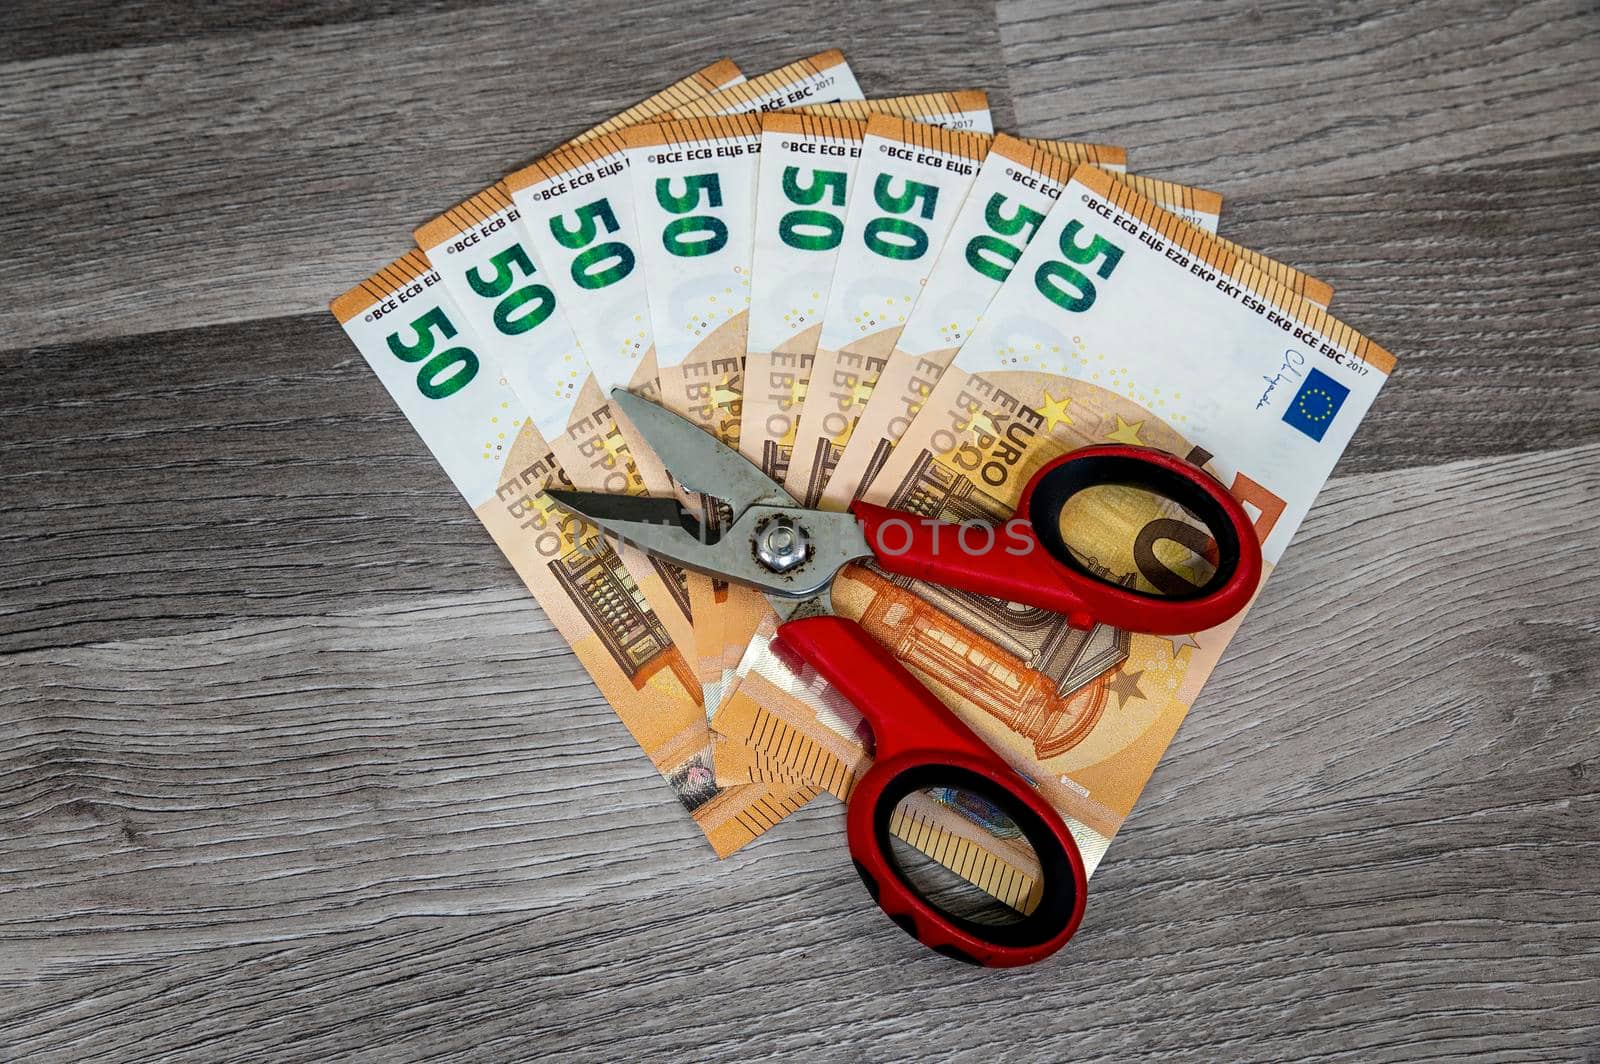 50 euro bills with work scissors by carfedeph